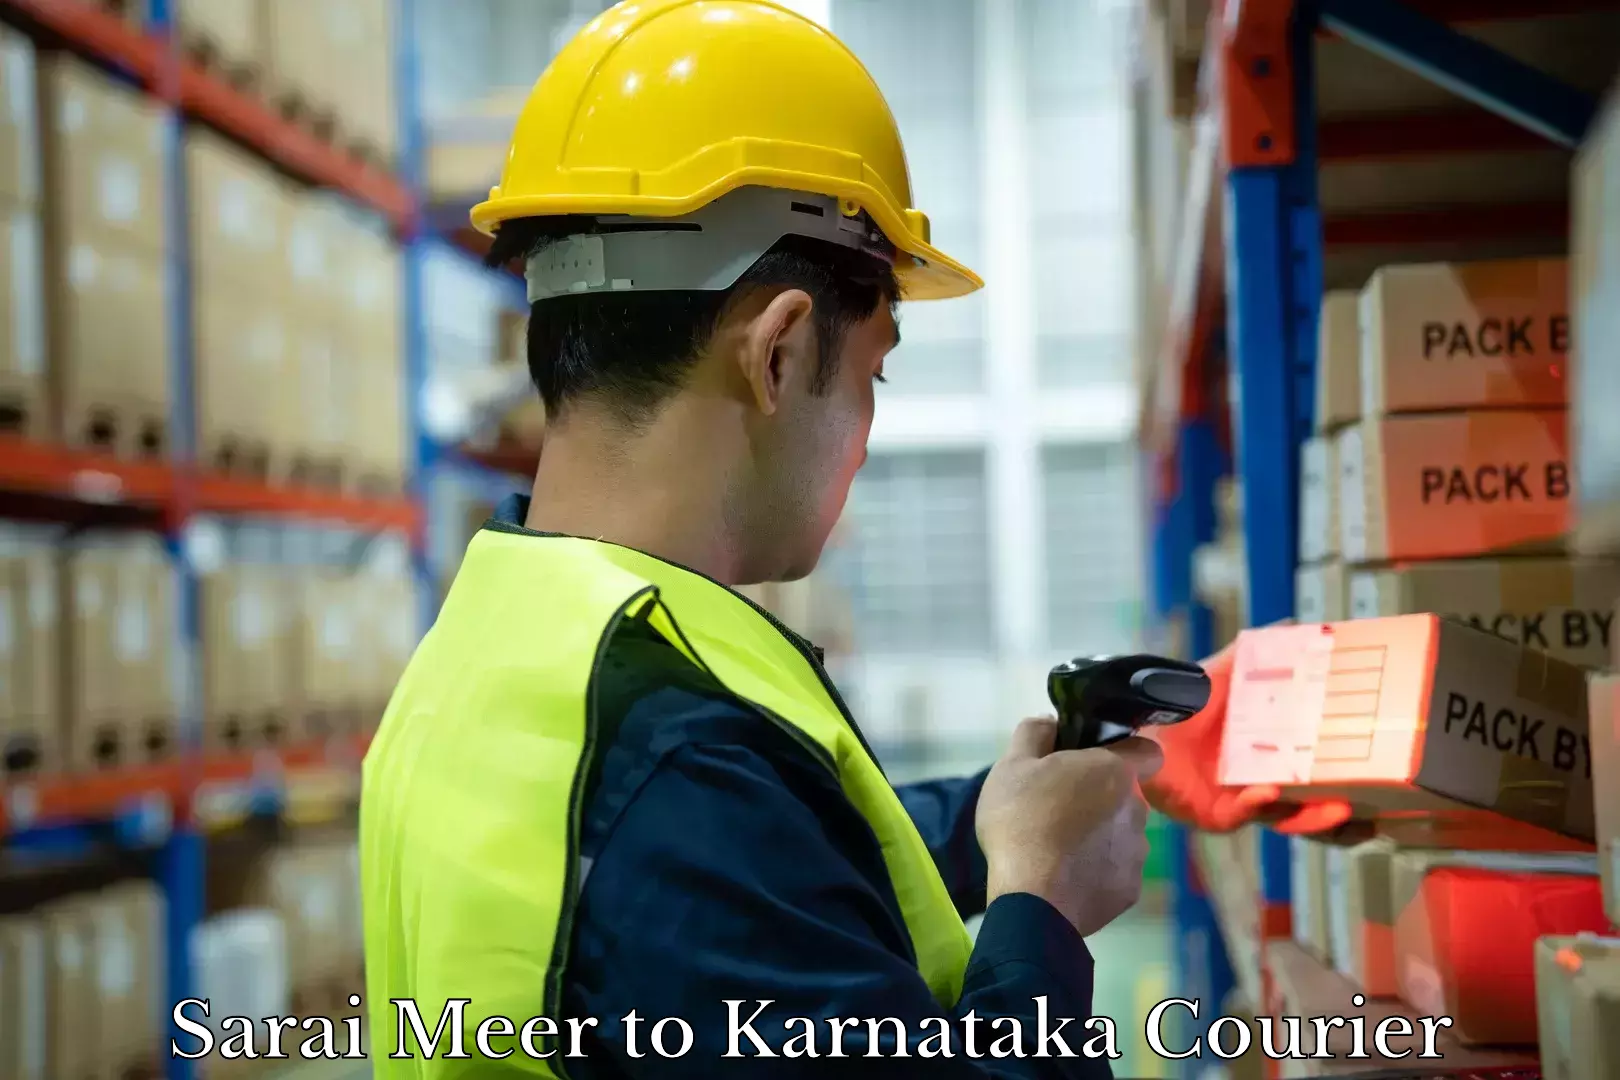 Luggage transport company Sarai Meer to Karnataka